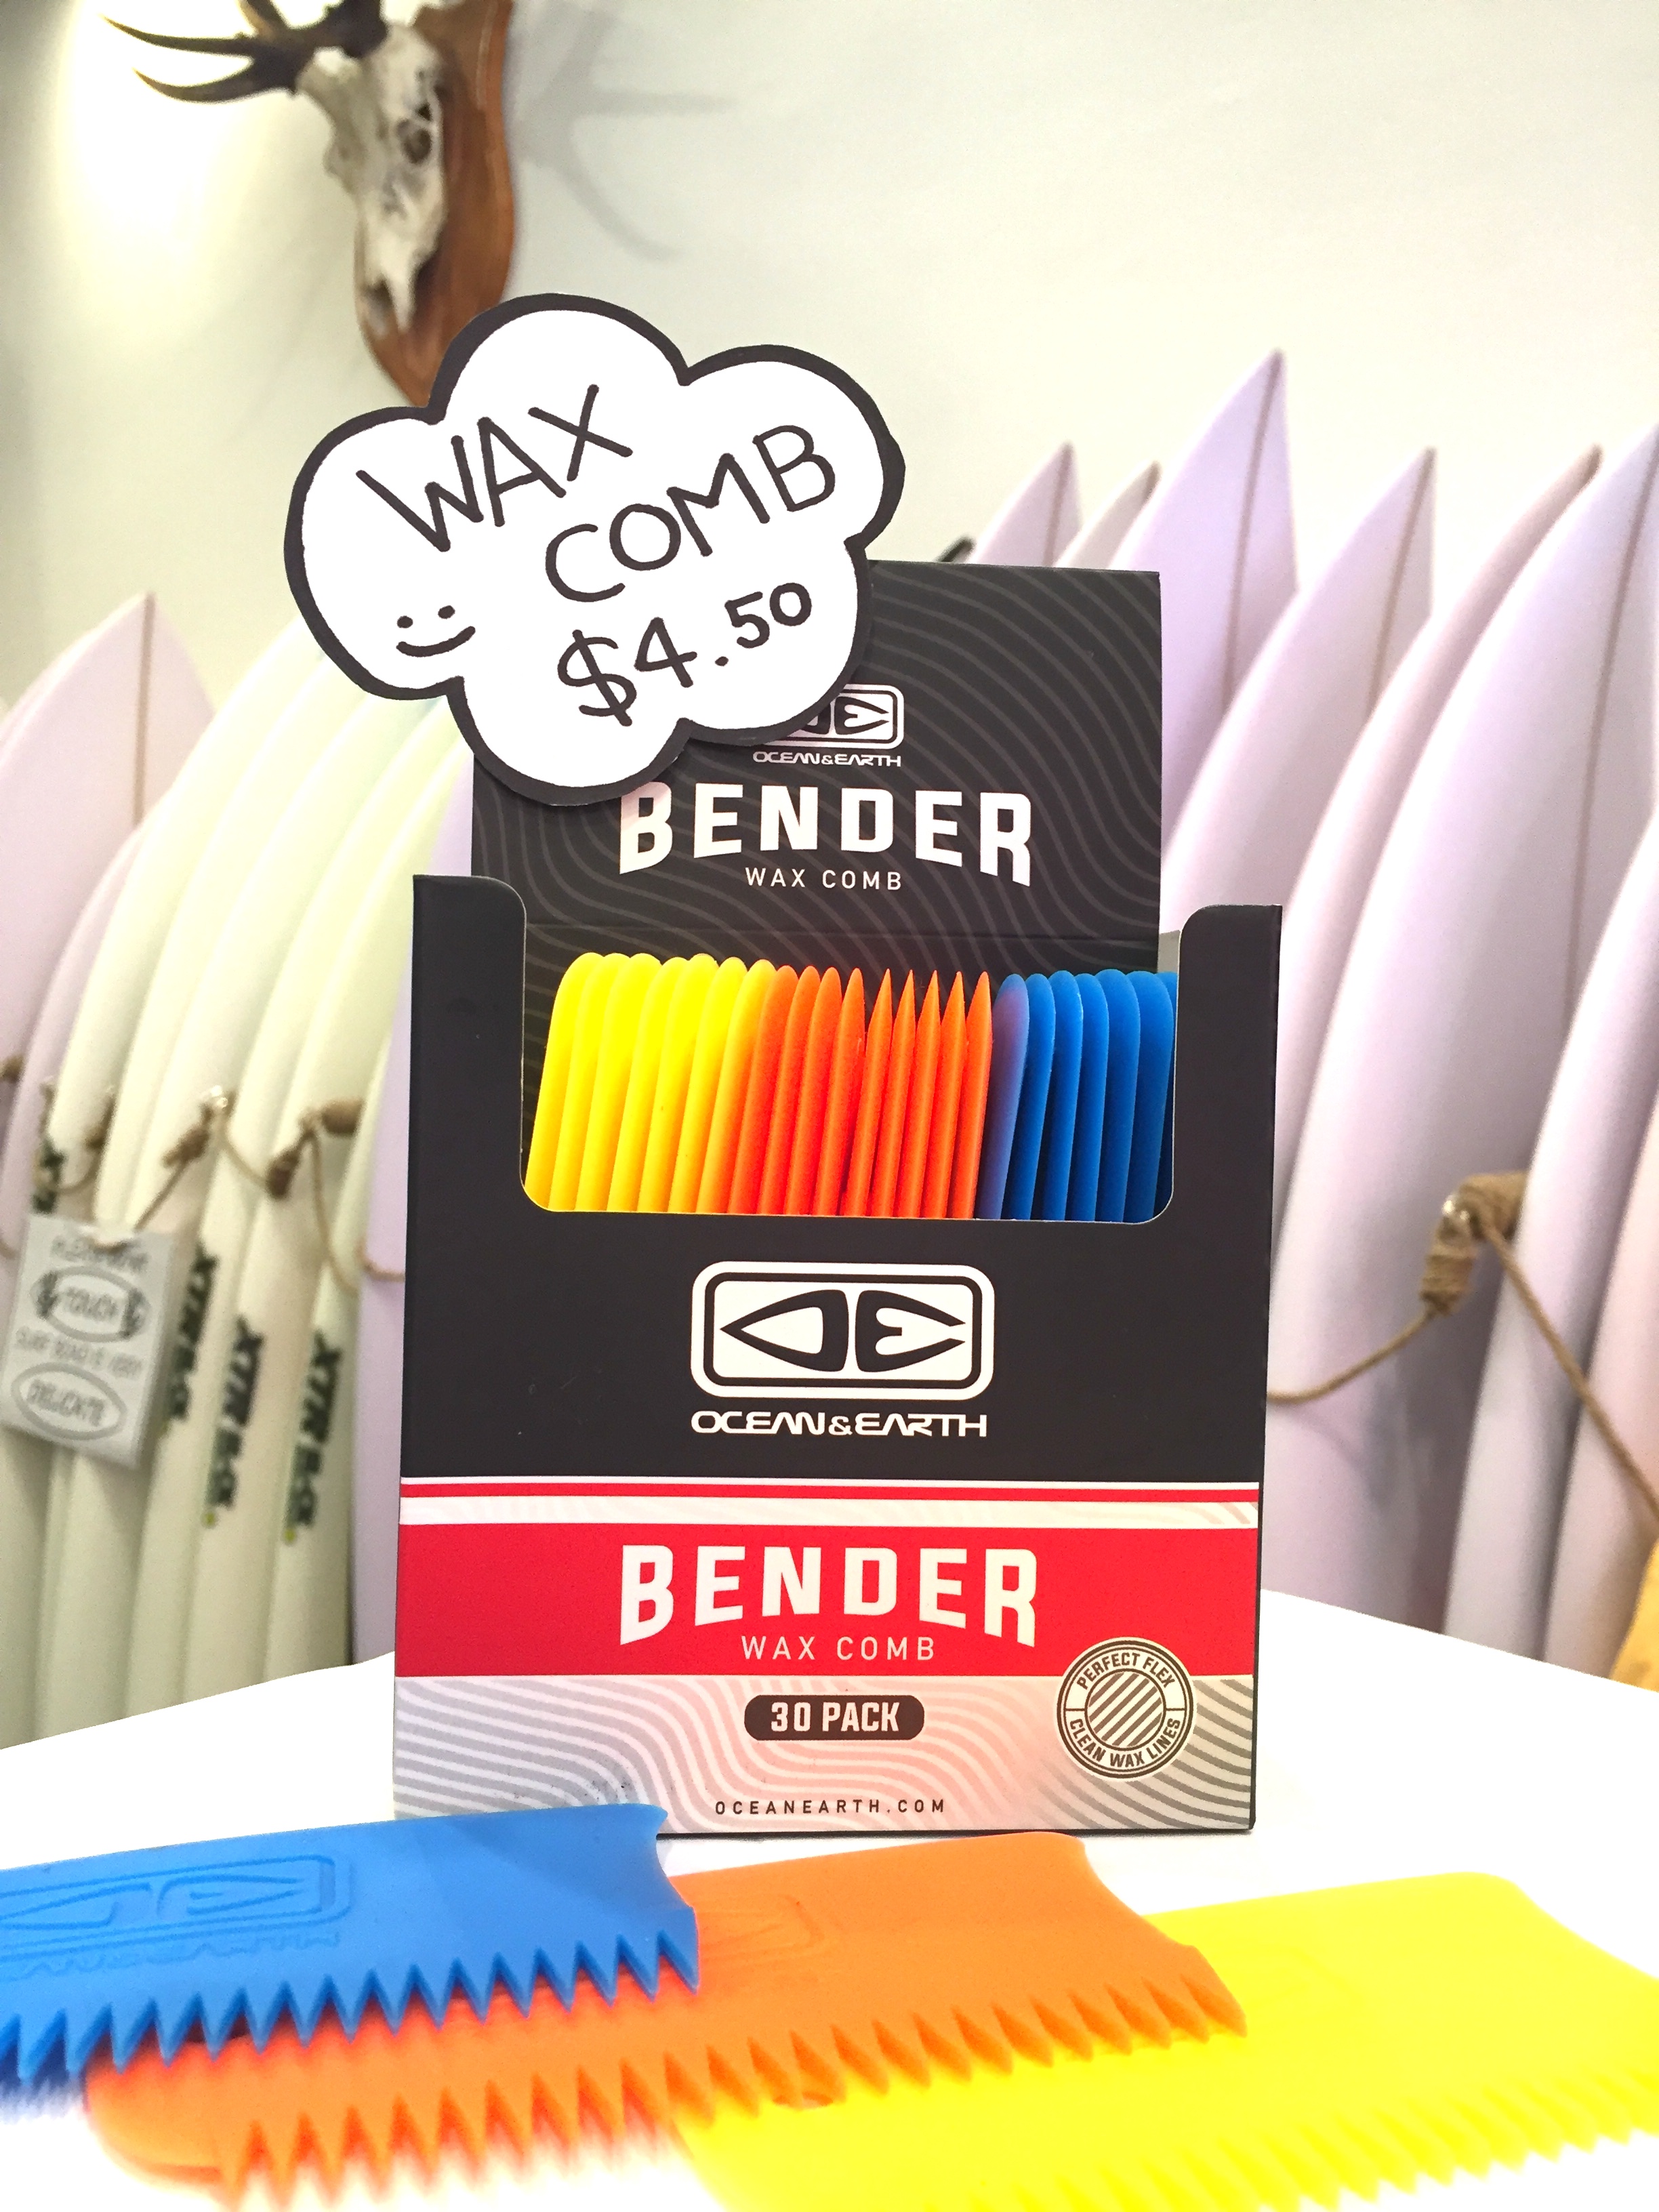 Bender wax comb